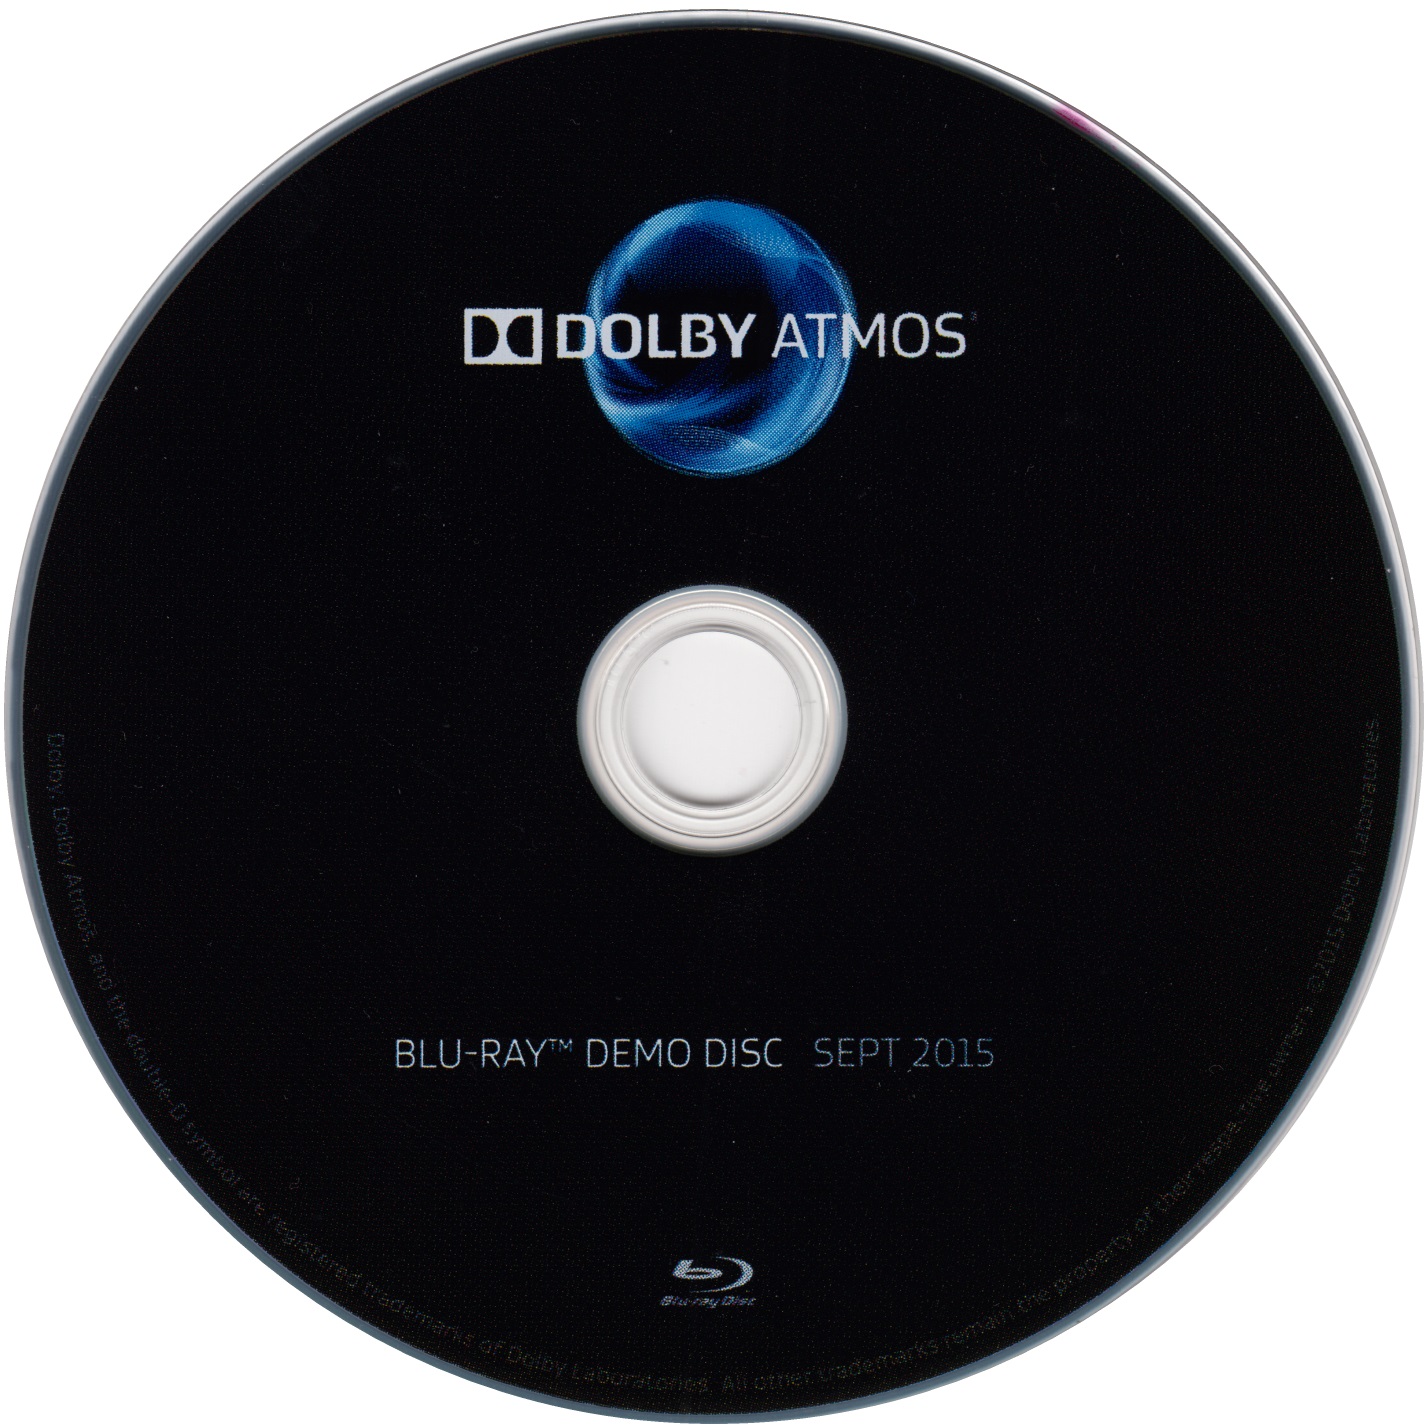 4k dolby atmos demo disk